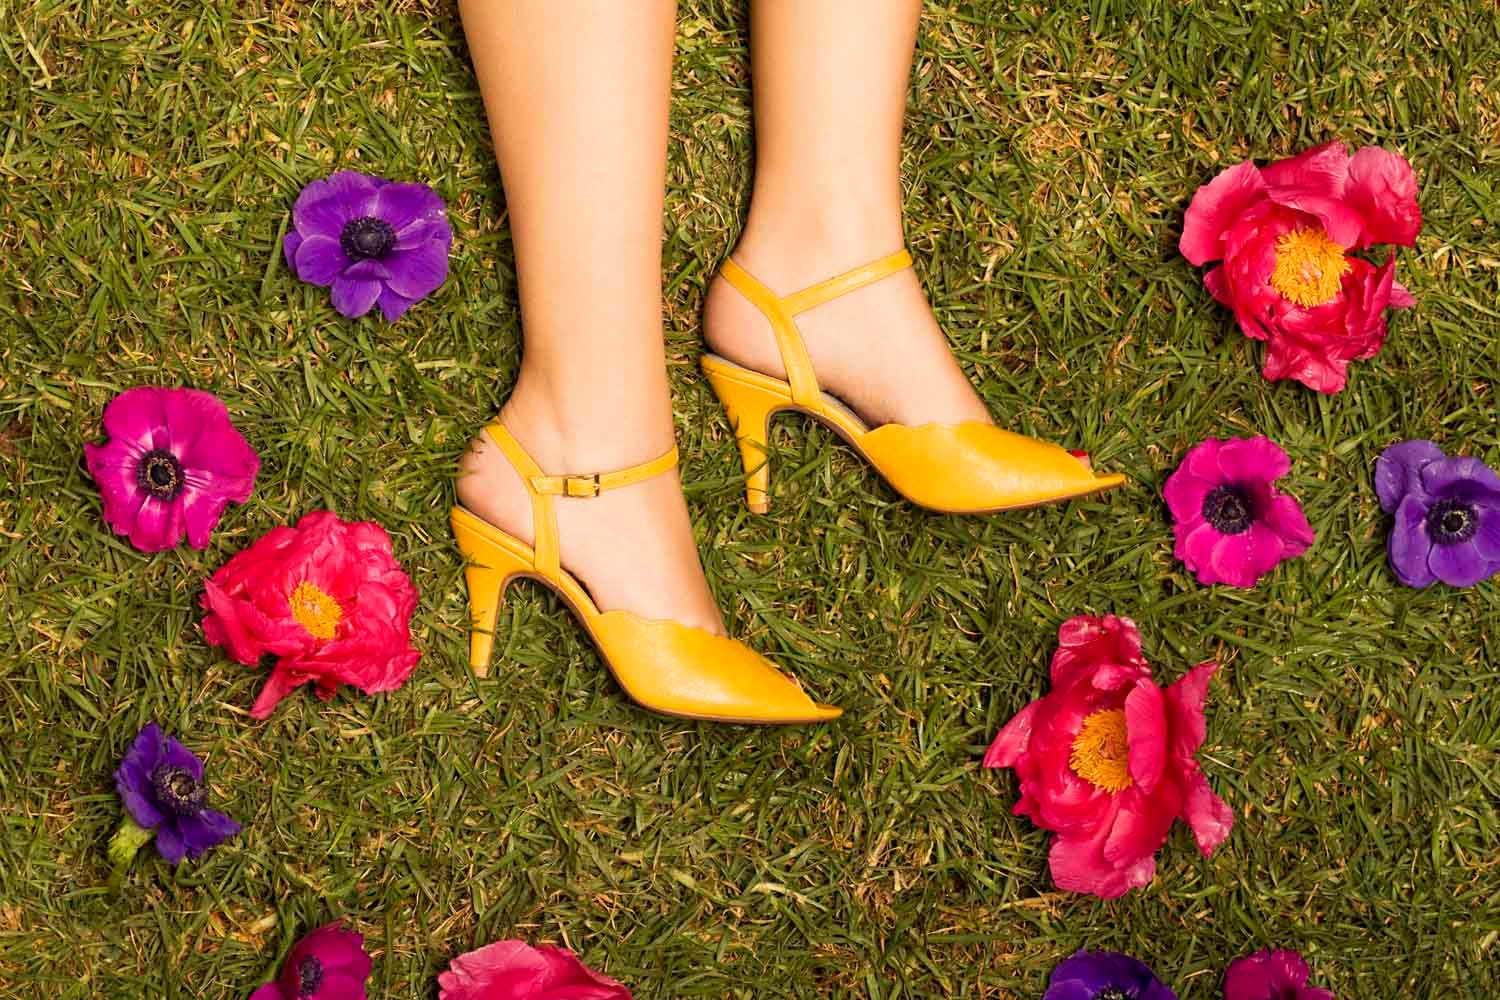 Roni Kantor Vintage inspired - ADINA high heel sandals - sunshine yellow - FREE SHIPPING